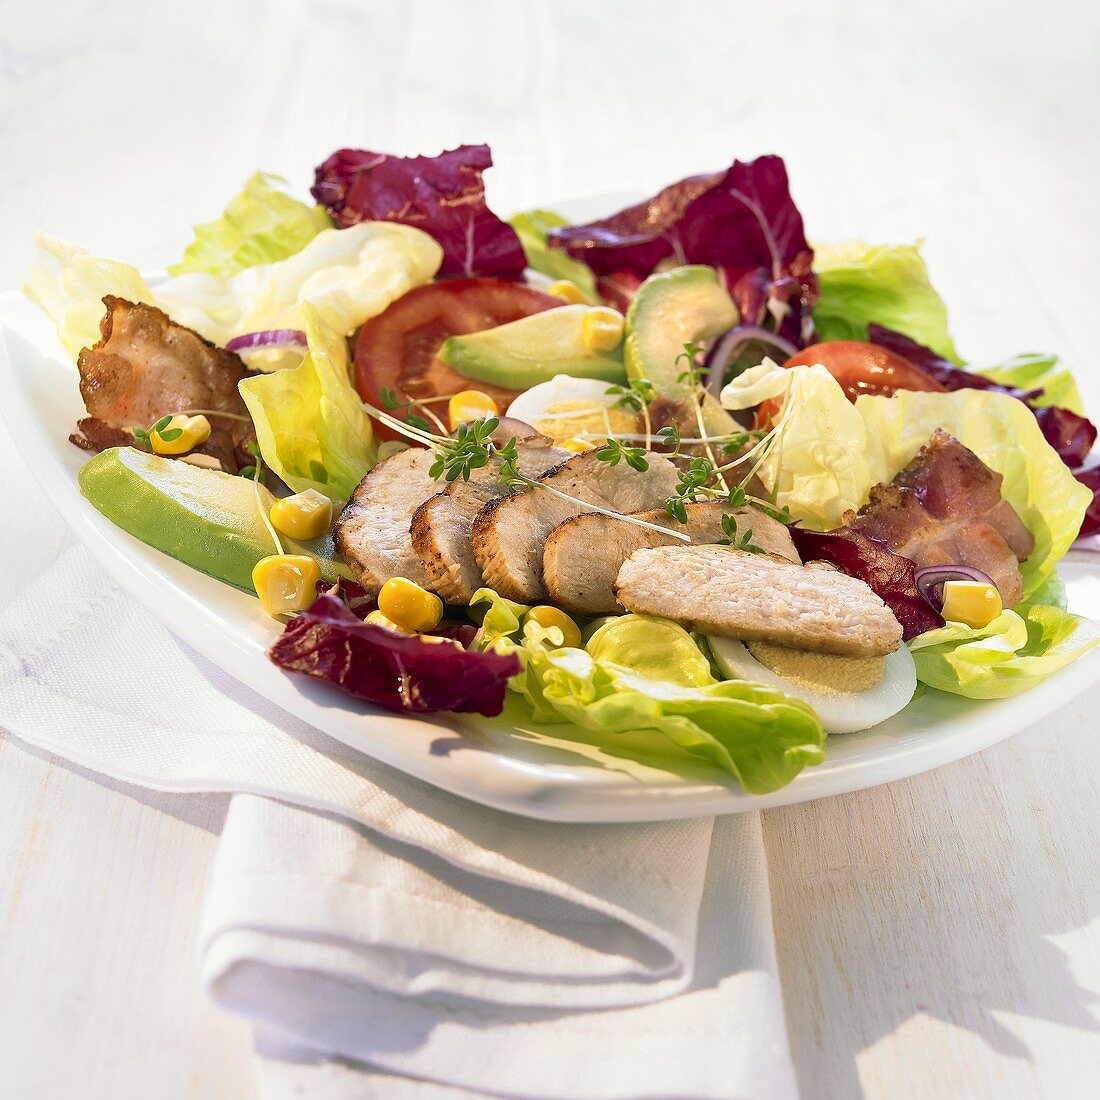 Cobb salad (Salad with chicken breast, America)